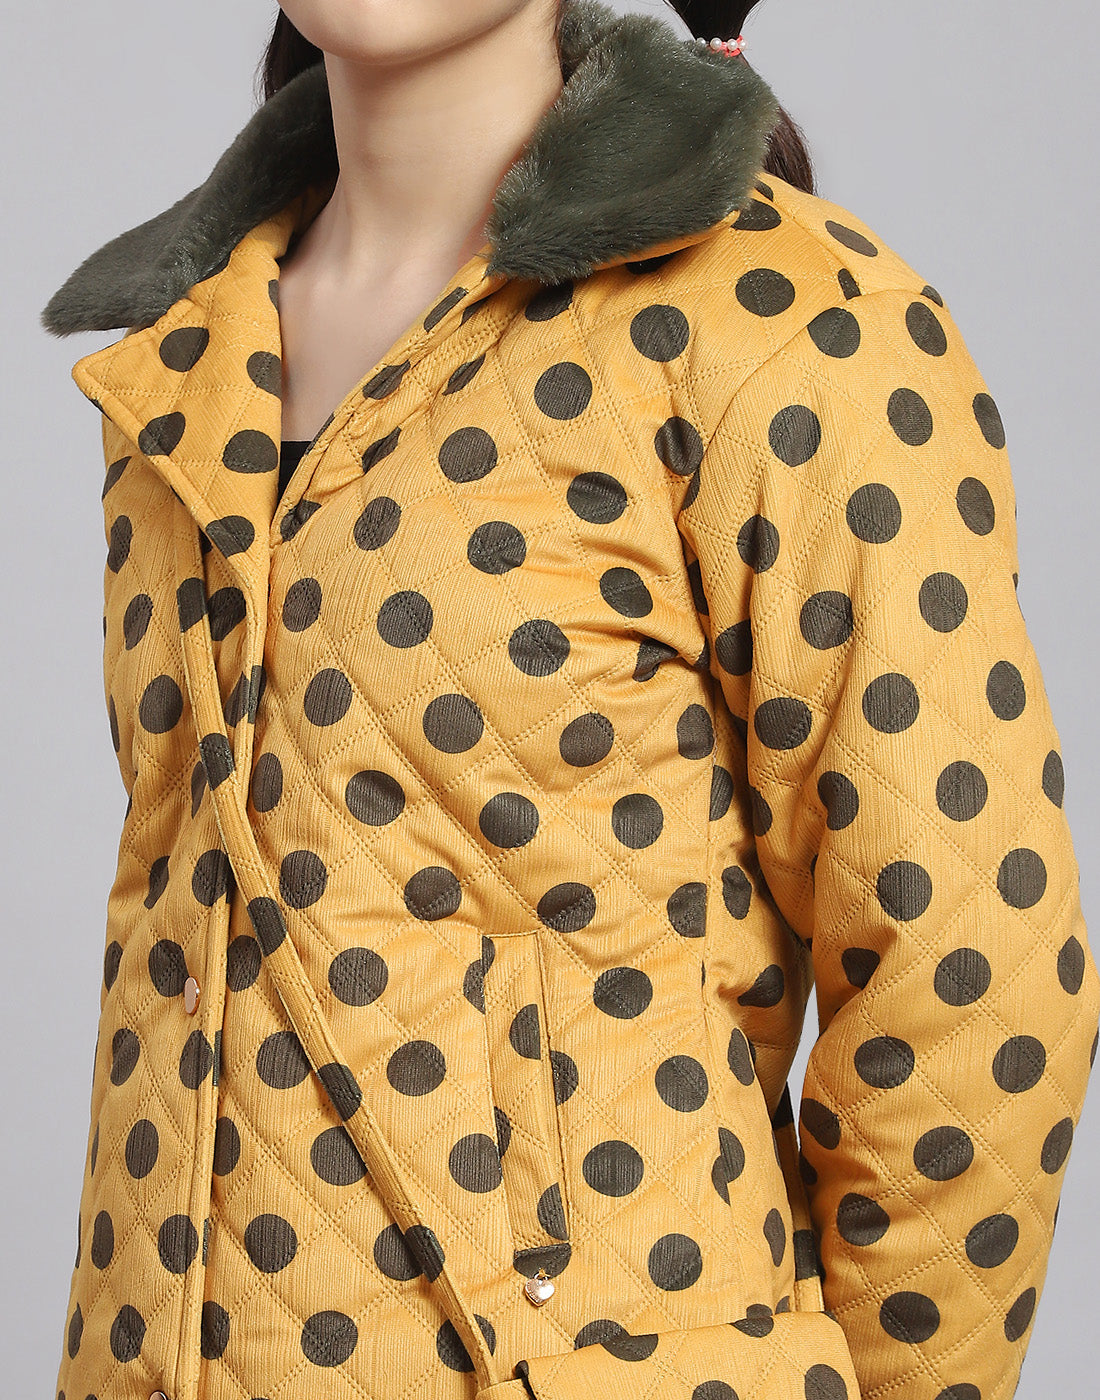 Girls Mustard Polka Dots Lapel Collar Full Sleeve Girls Jacket